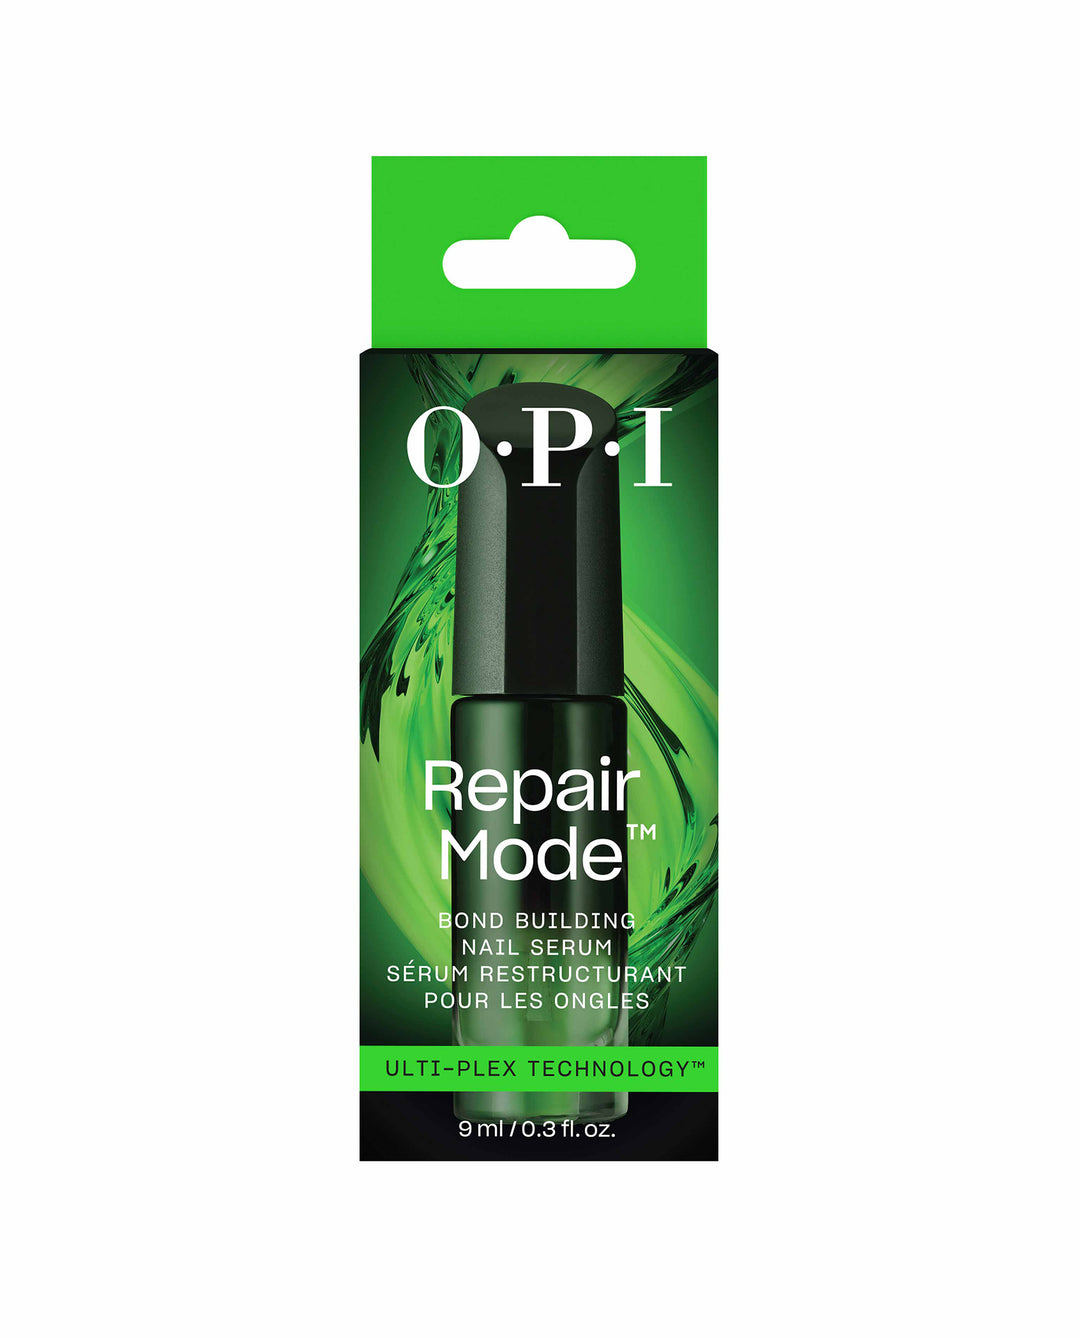 OPI Repair Mode Bond Building Nail Serum Nail Strengthener Carton